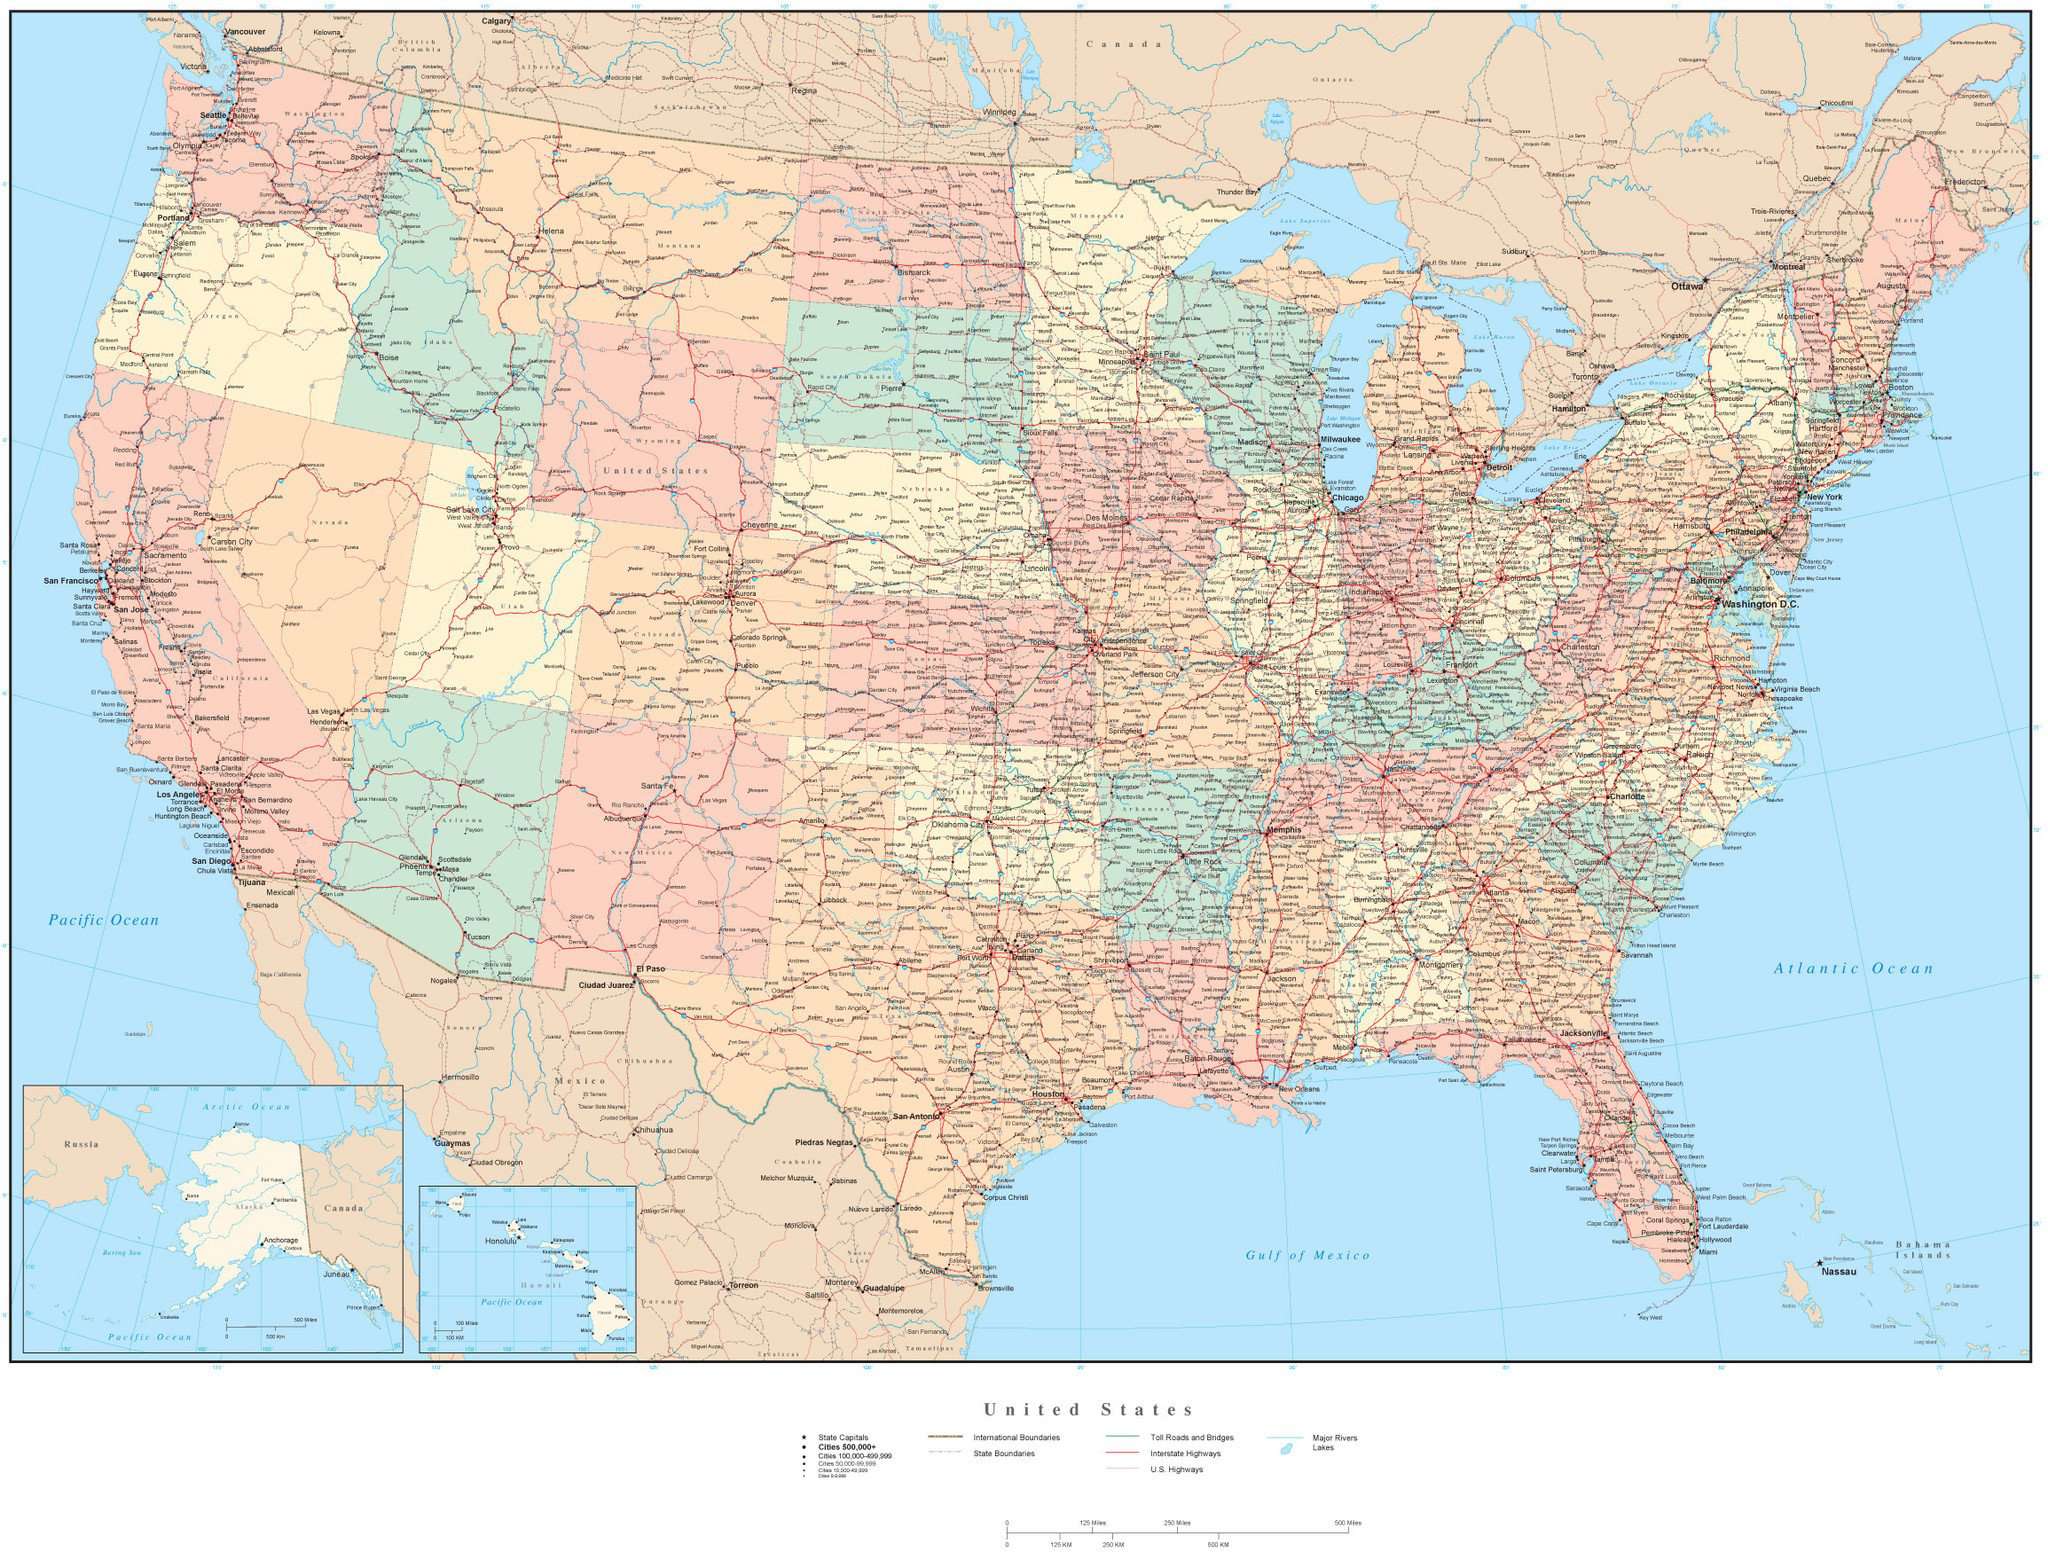 United States Railroad map in Adobe Illustrator vector format